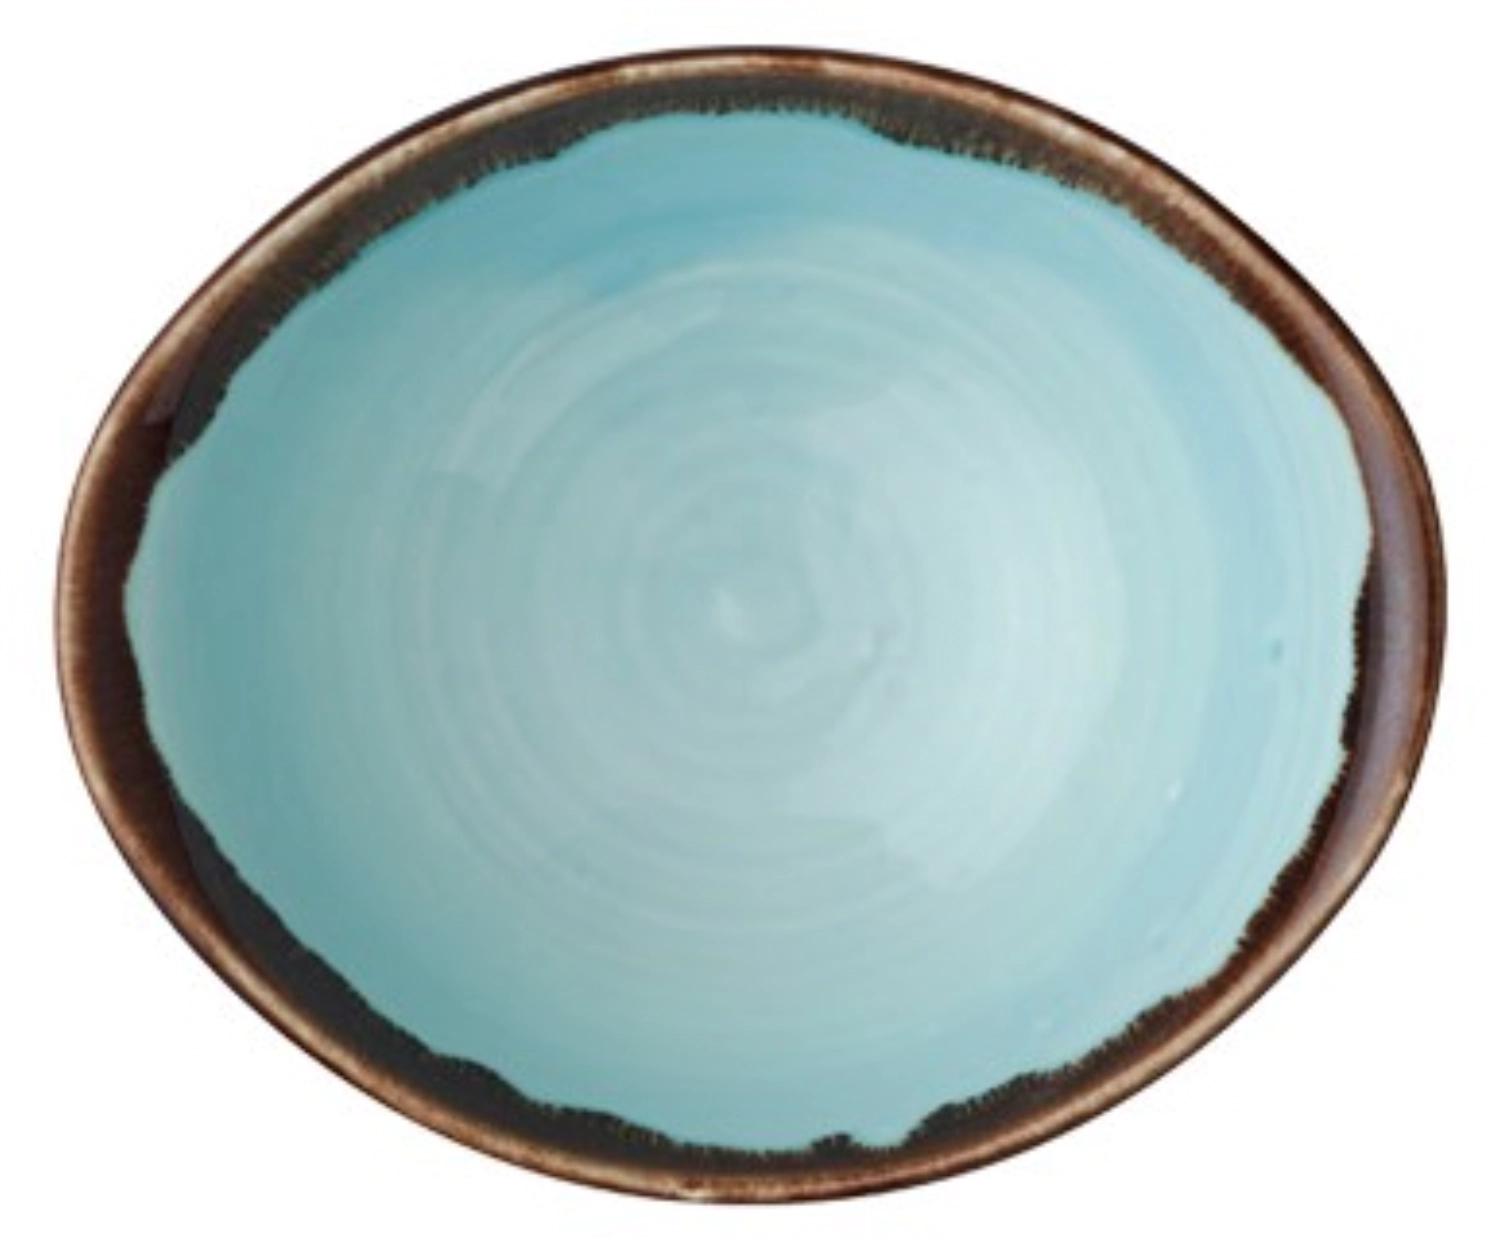 Harvest Turquoise Schüssel tief oval 19.9x16.8cm